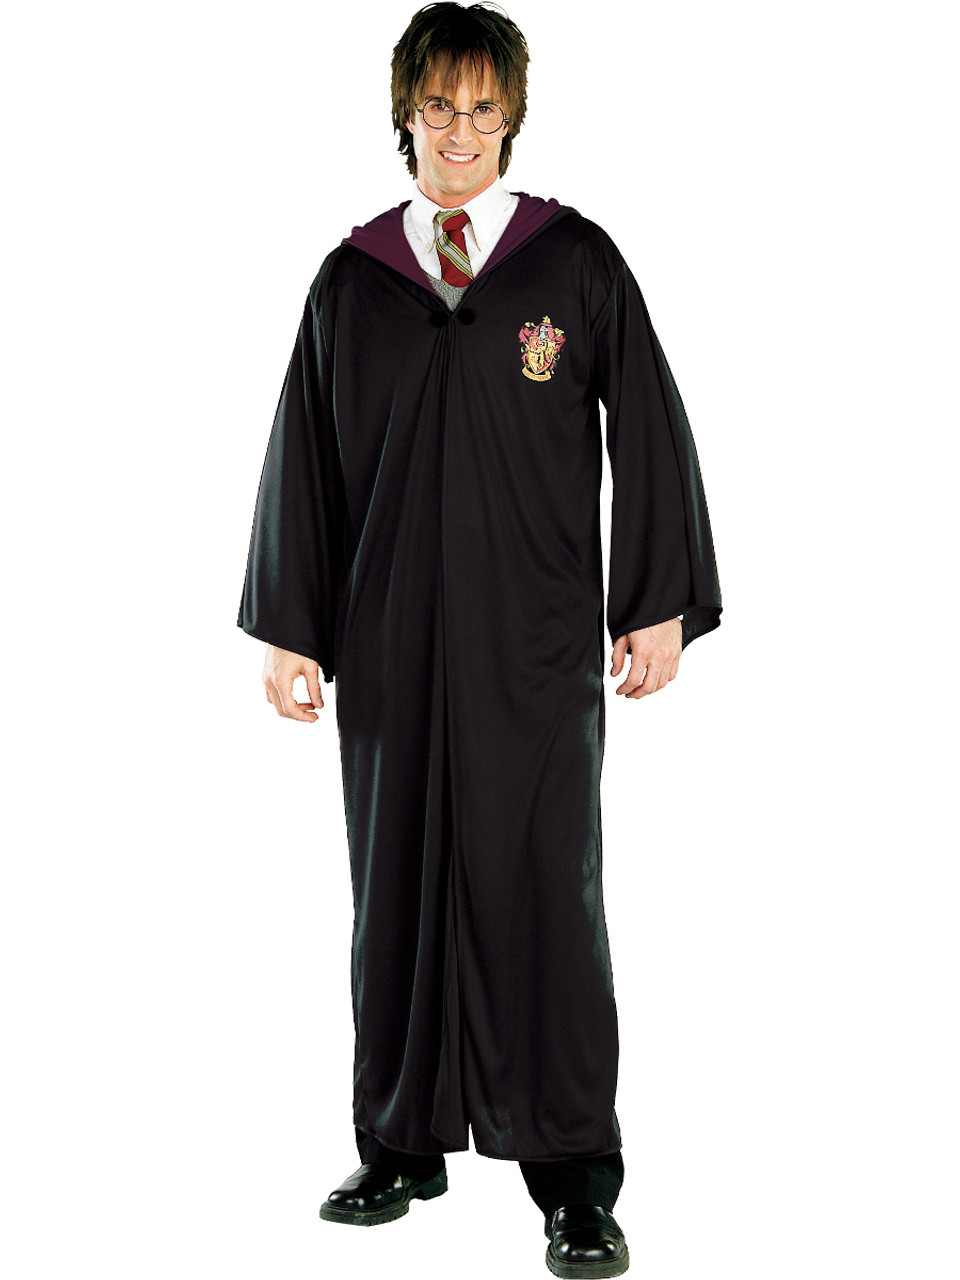 Harry Potter Robe Adult Costume - Standard 883028978908 